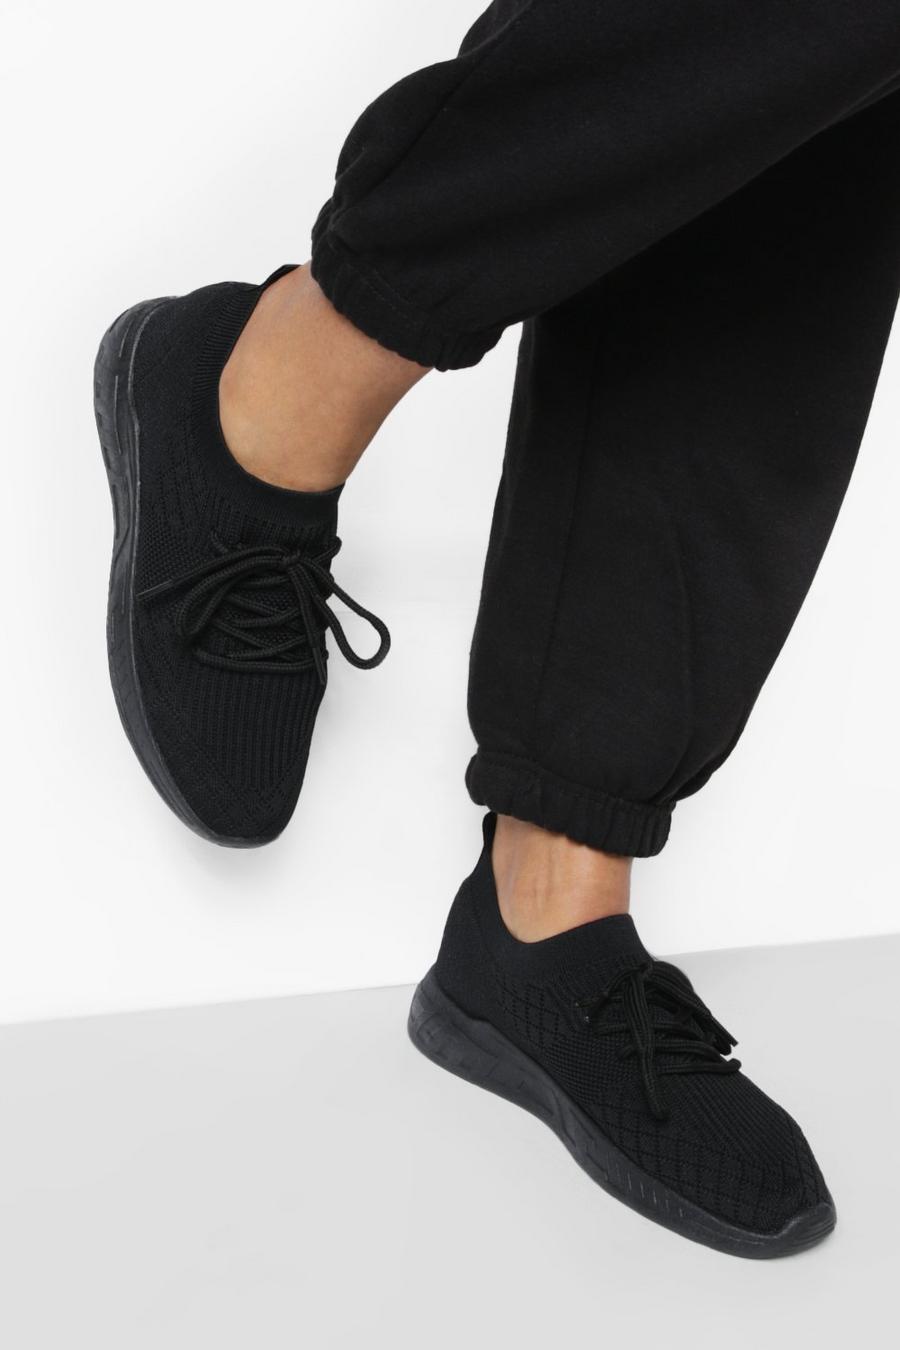 Scarpe da ginnastica sportive Basic a calzata ampia in maglia, Black nero